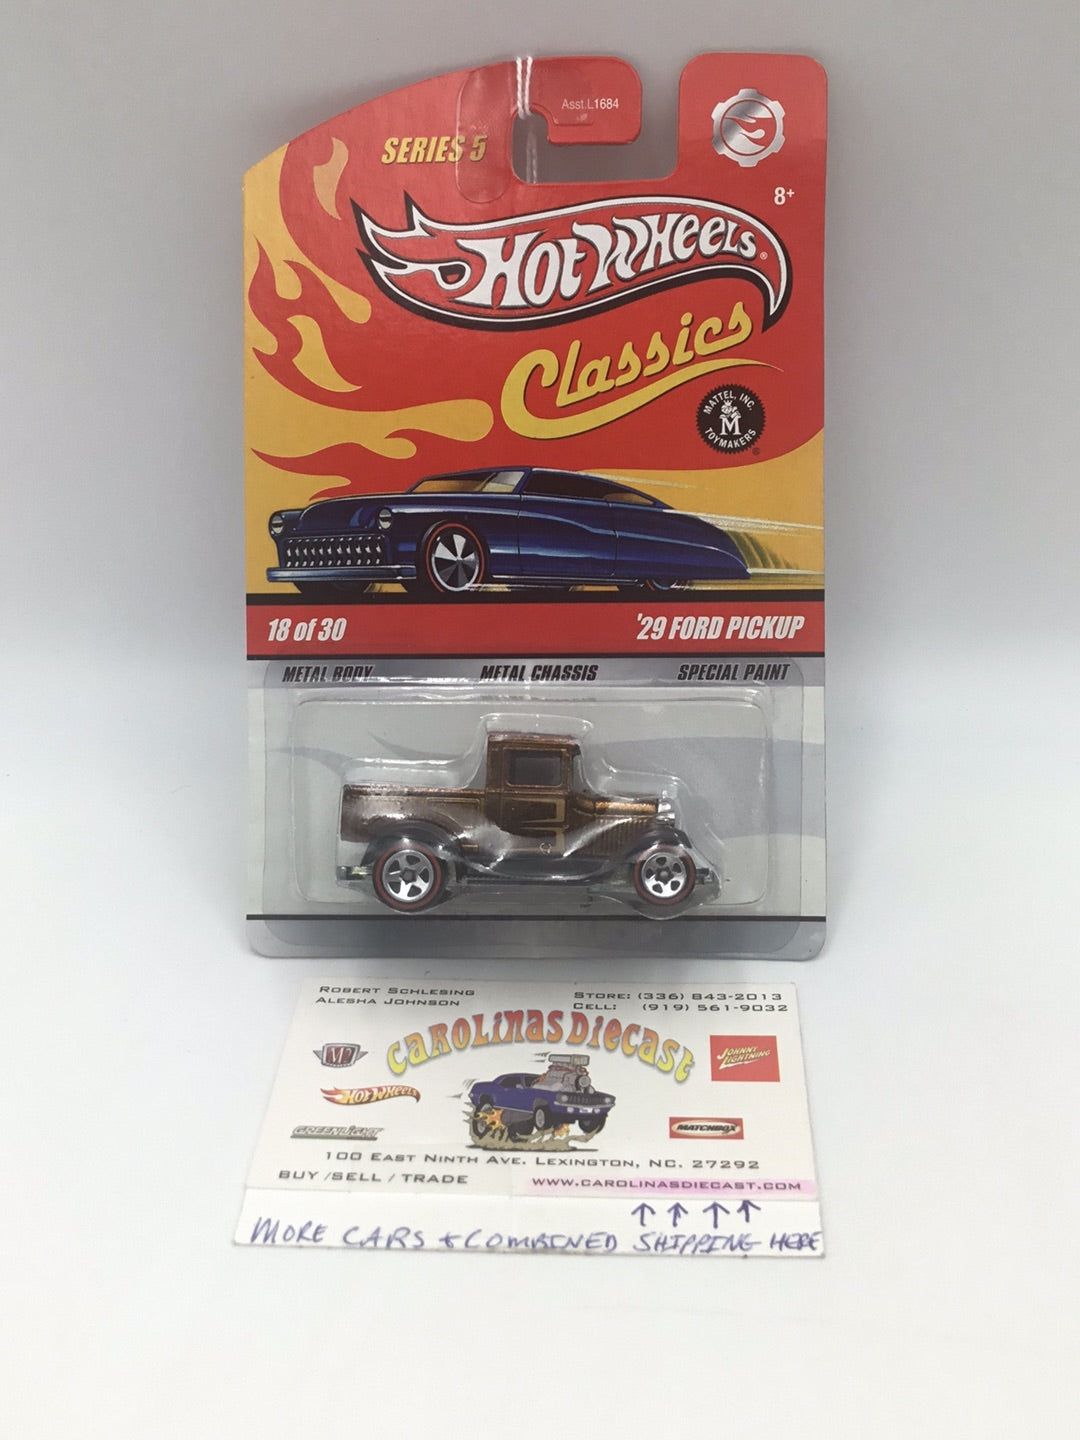 Hot wheels classics series 5 29 Ford Pickup dark gold